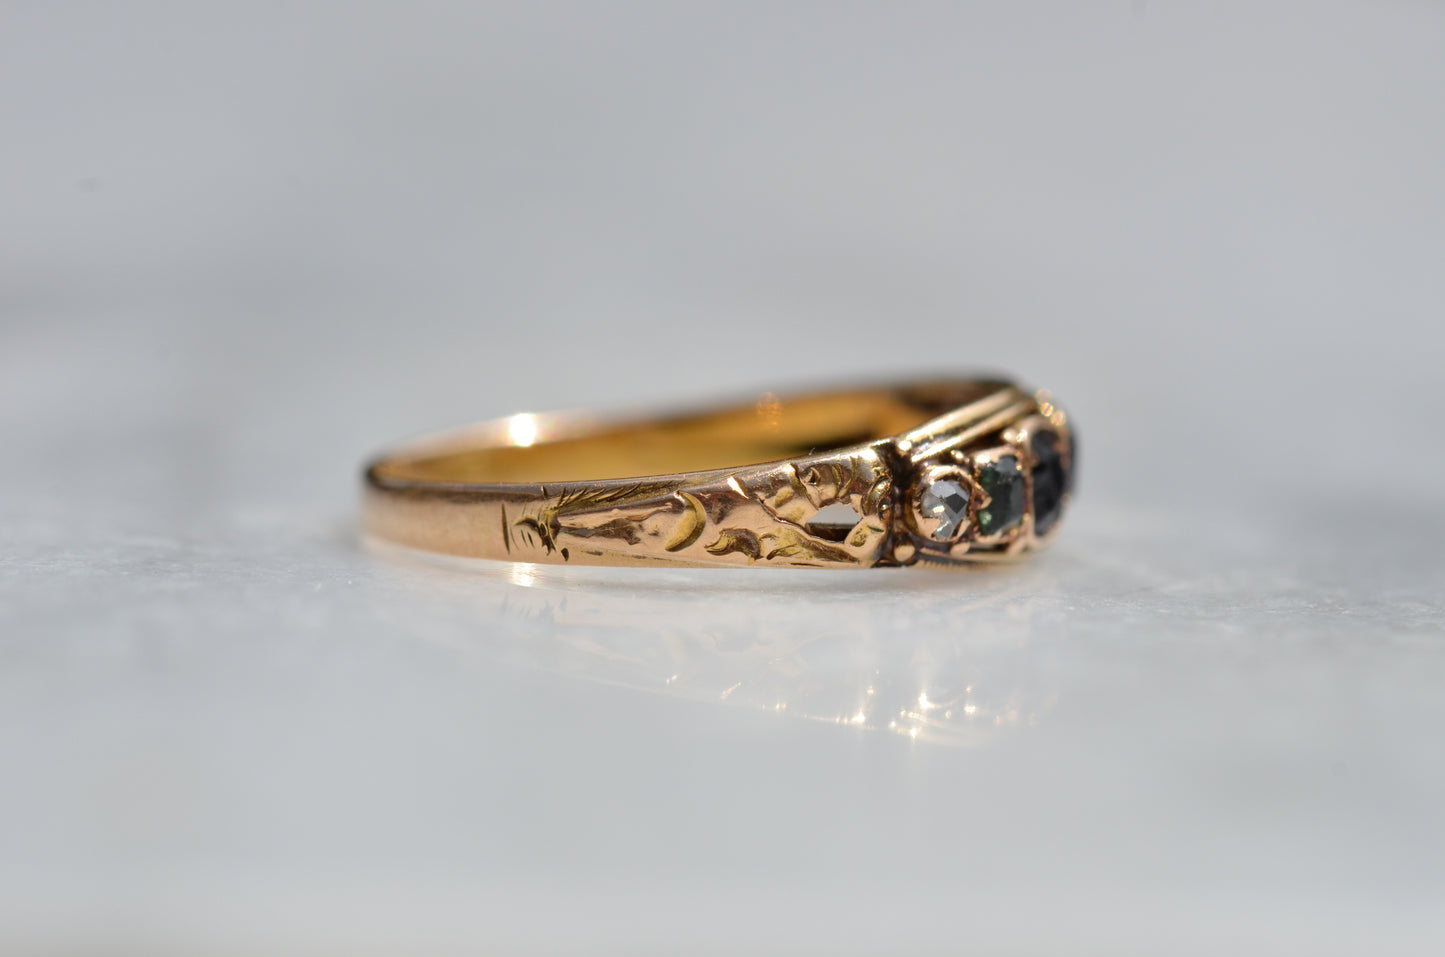 Sentimental Antique “Dearest” Acrostic Ring